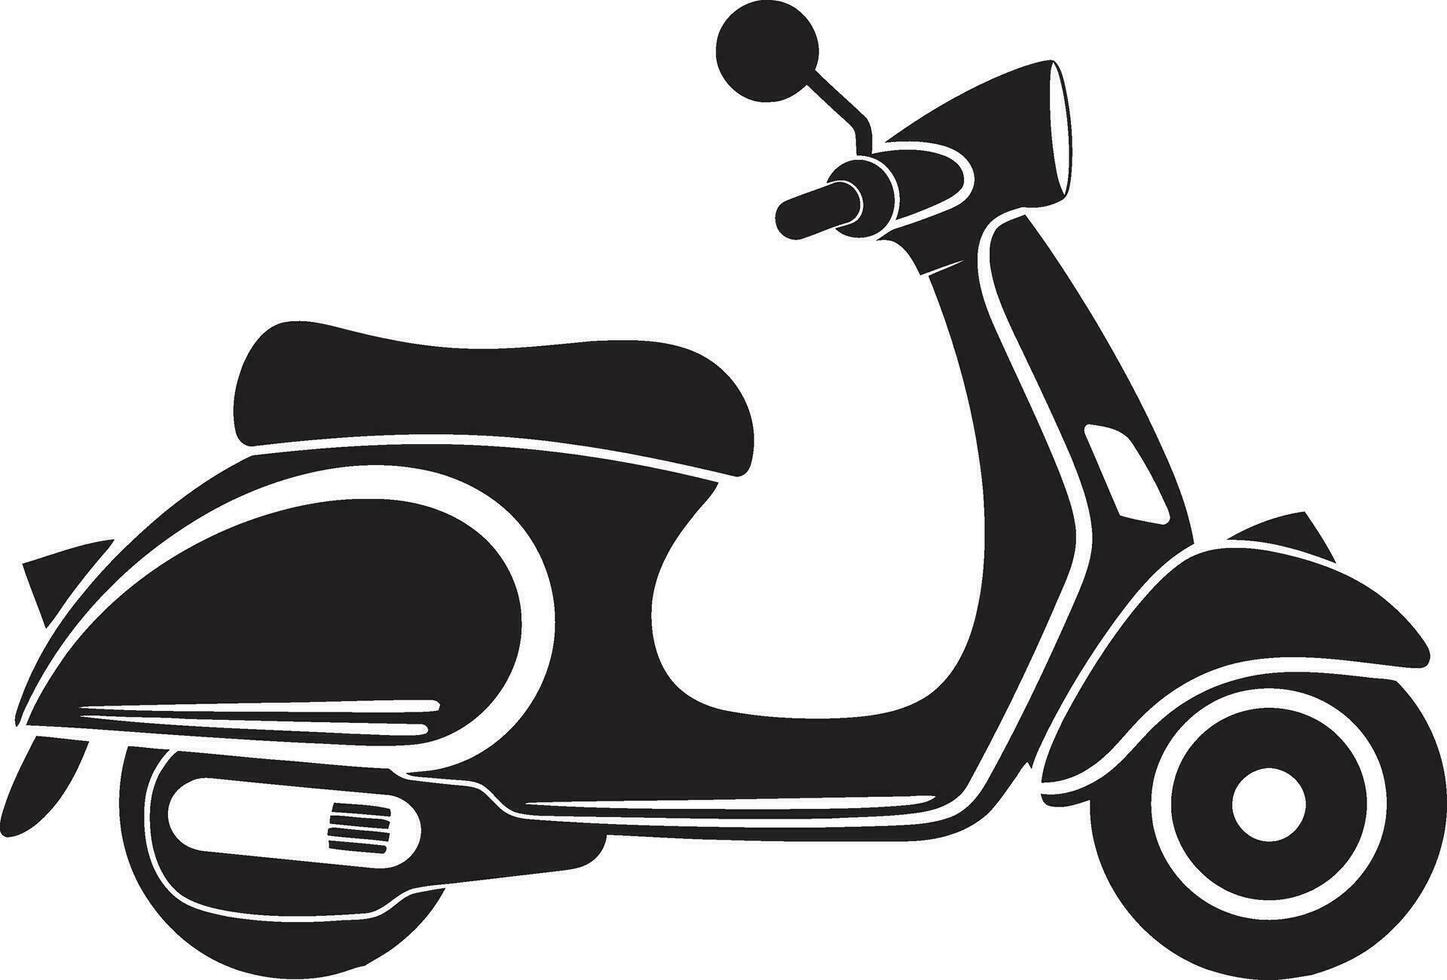 scooter navegación aplicación interfaz scooter estilo de vida revista untado vector